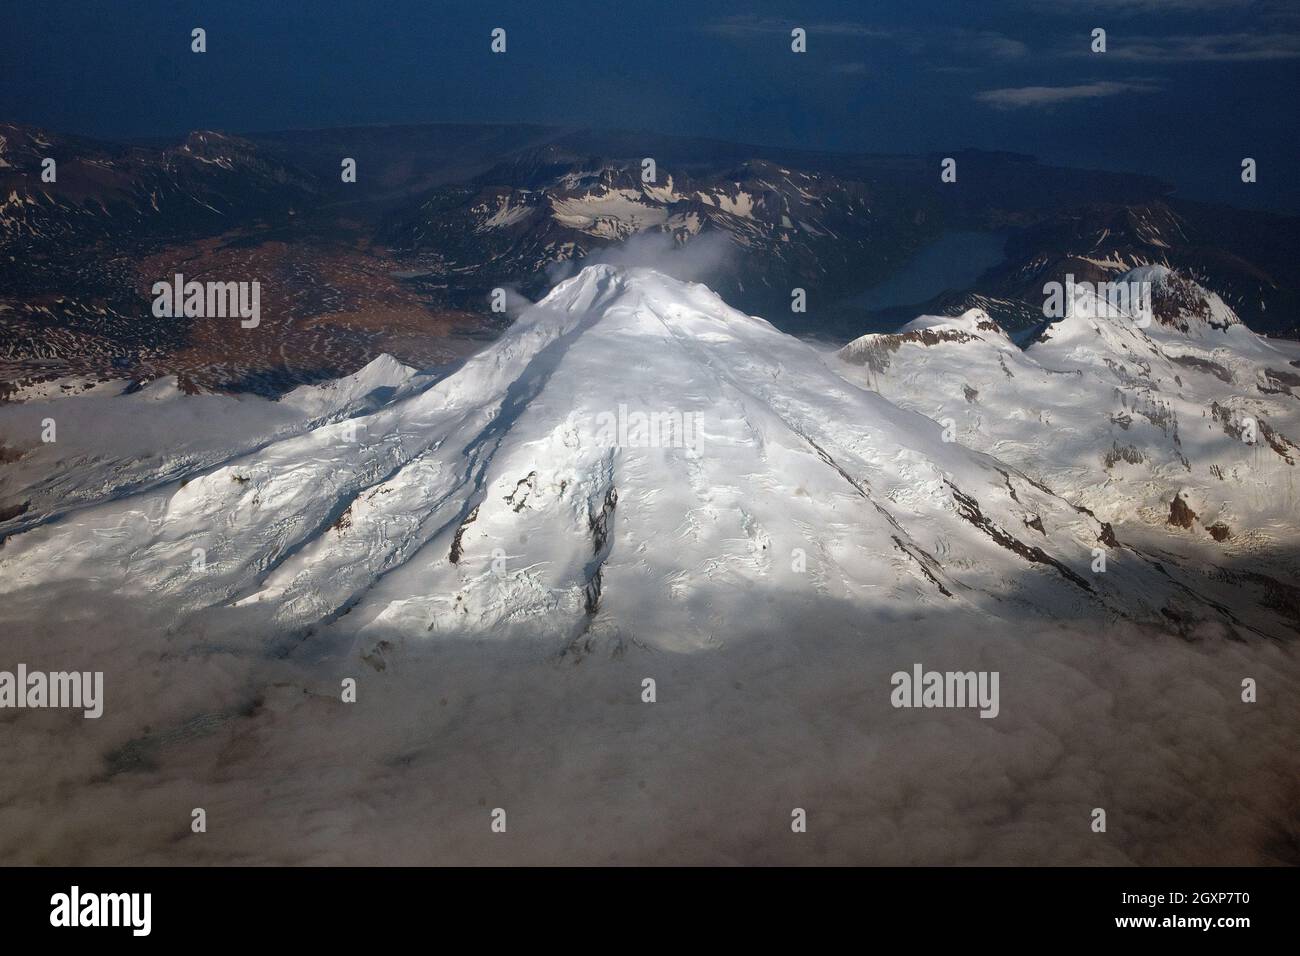 Aerial view of snowcapped volcano Mount Iliamna, Alaska, USA Stock Photo